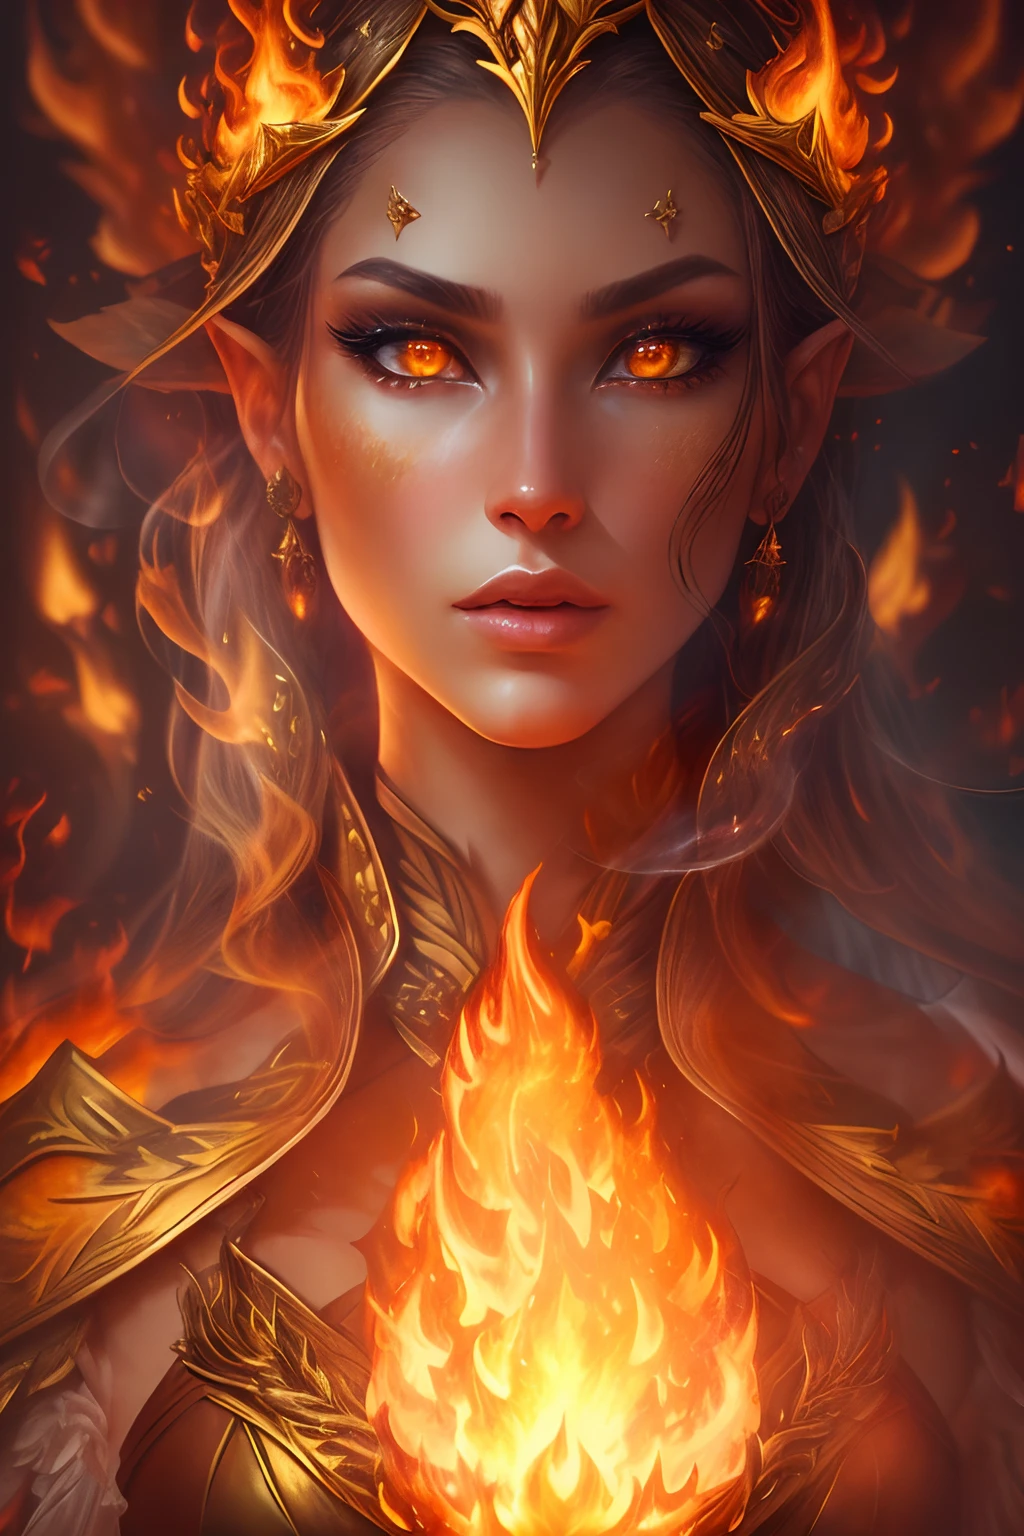 這 (現實幻想) 藝術包含餘燼, 真正的火焰, 真正的熱量, 和 realistic fire. Generate a masterpiece artwork of a  female fire druid 和 large (((orange 和 gold))) 眼睛. The fire druid is awe-inspiring 和 beautiful ((realistic fiery 眼睛)) alight 和 confidence 和 power. Her features are elegant 和 well defined, 和 ((柔軟的)) 和 (((蓬松))) 和 (((光滑的))) 嘴唇, 精靈骨骼結構, 和 realistic shading. Her 眼睛 are important 和 should be the focal point of this artwork, 和 ((極為真實的細節, 宏觀細節, 和 shimmer.)) She is wearing a billowing 和 glittering dress ((由逼真的火焰製成)) 和 jewels that glimmer in the fire light. Wisps of fire 和 smoke line the intricate bodice of the dress. 包括凹凸, 石头, 火紅的虹彩, 發光的餘燼, silk 和 satin 和 leather, 有趣的背景, 和 heavy fantasy elements. 相机: 利用動態構圖技術增強真實的火焰.